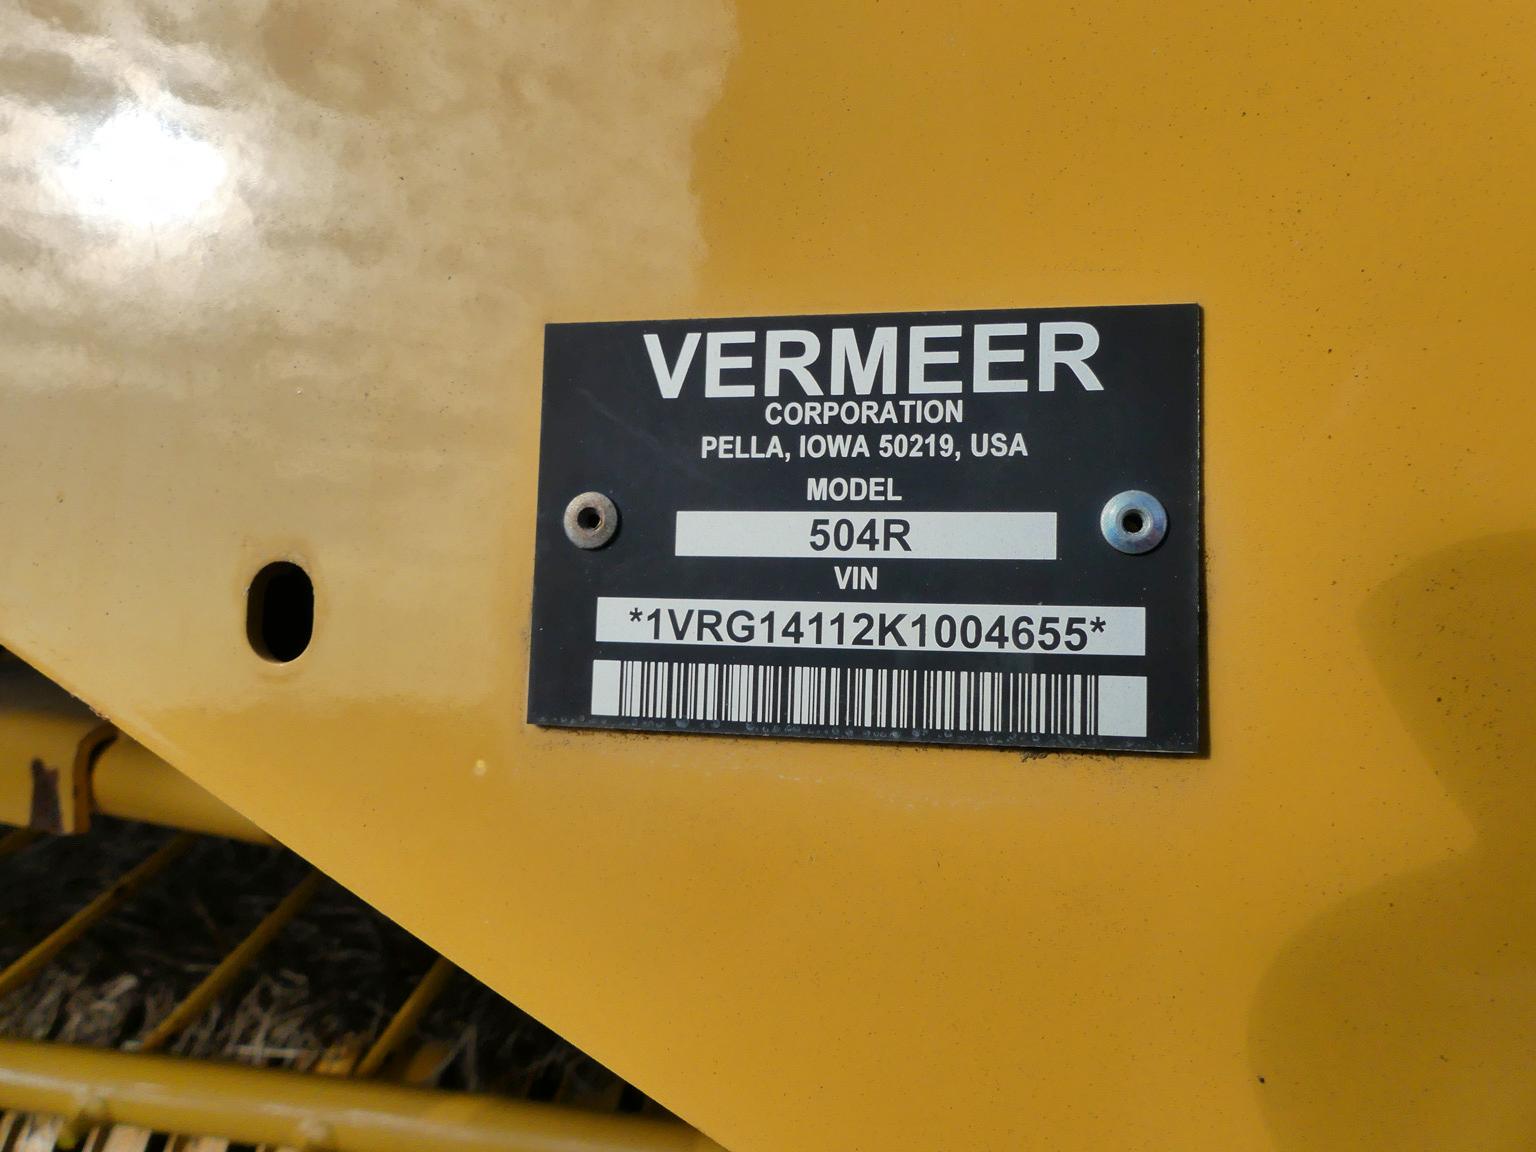 2019 Vermeer 504R Premium Round Baler, s/n 1VRG14112K1004655 w/ Monitor